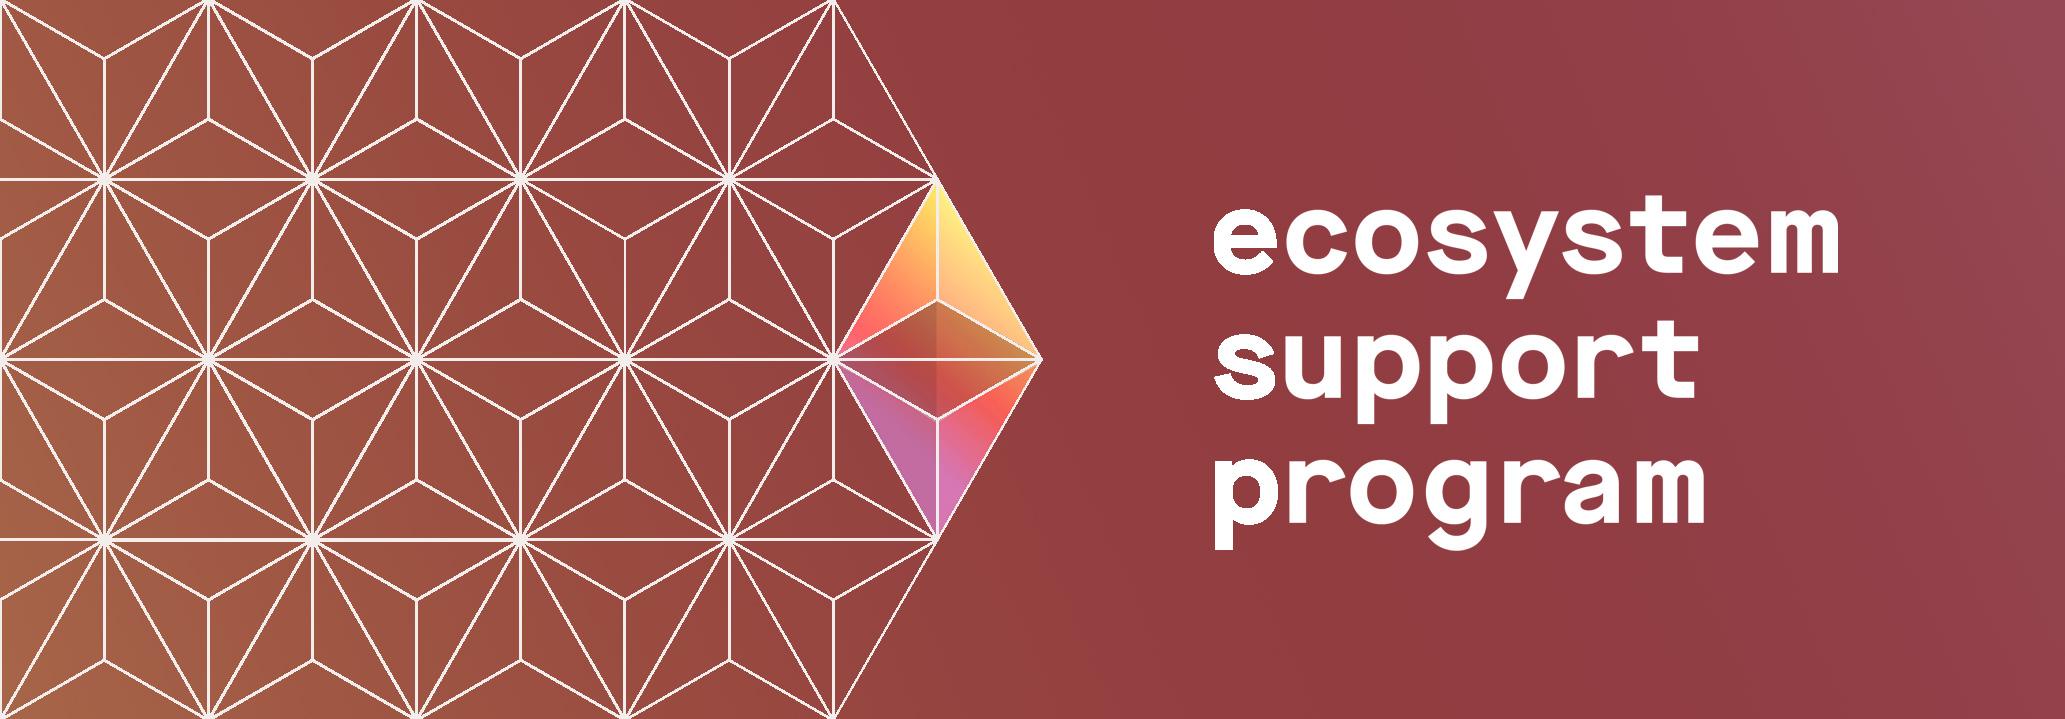 Ecosystem Support Program: Allocation Update, Q1 2020